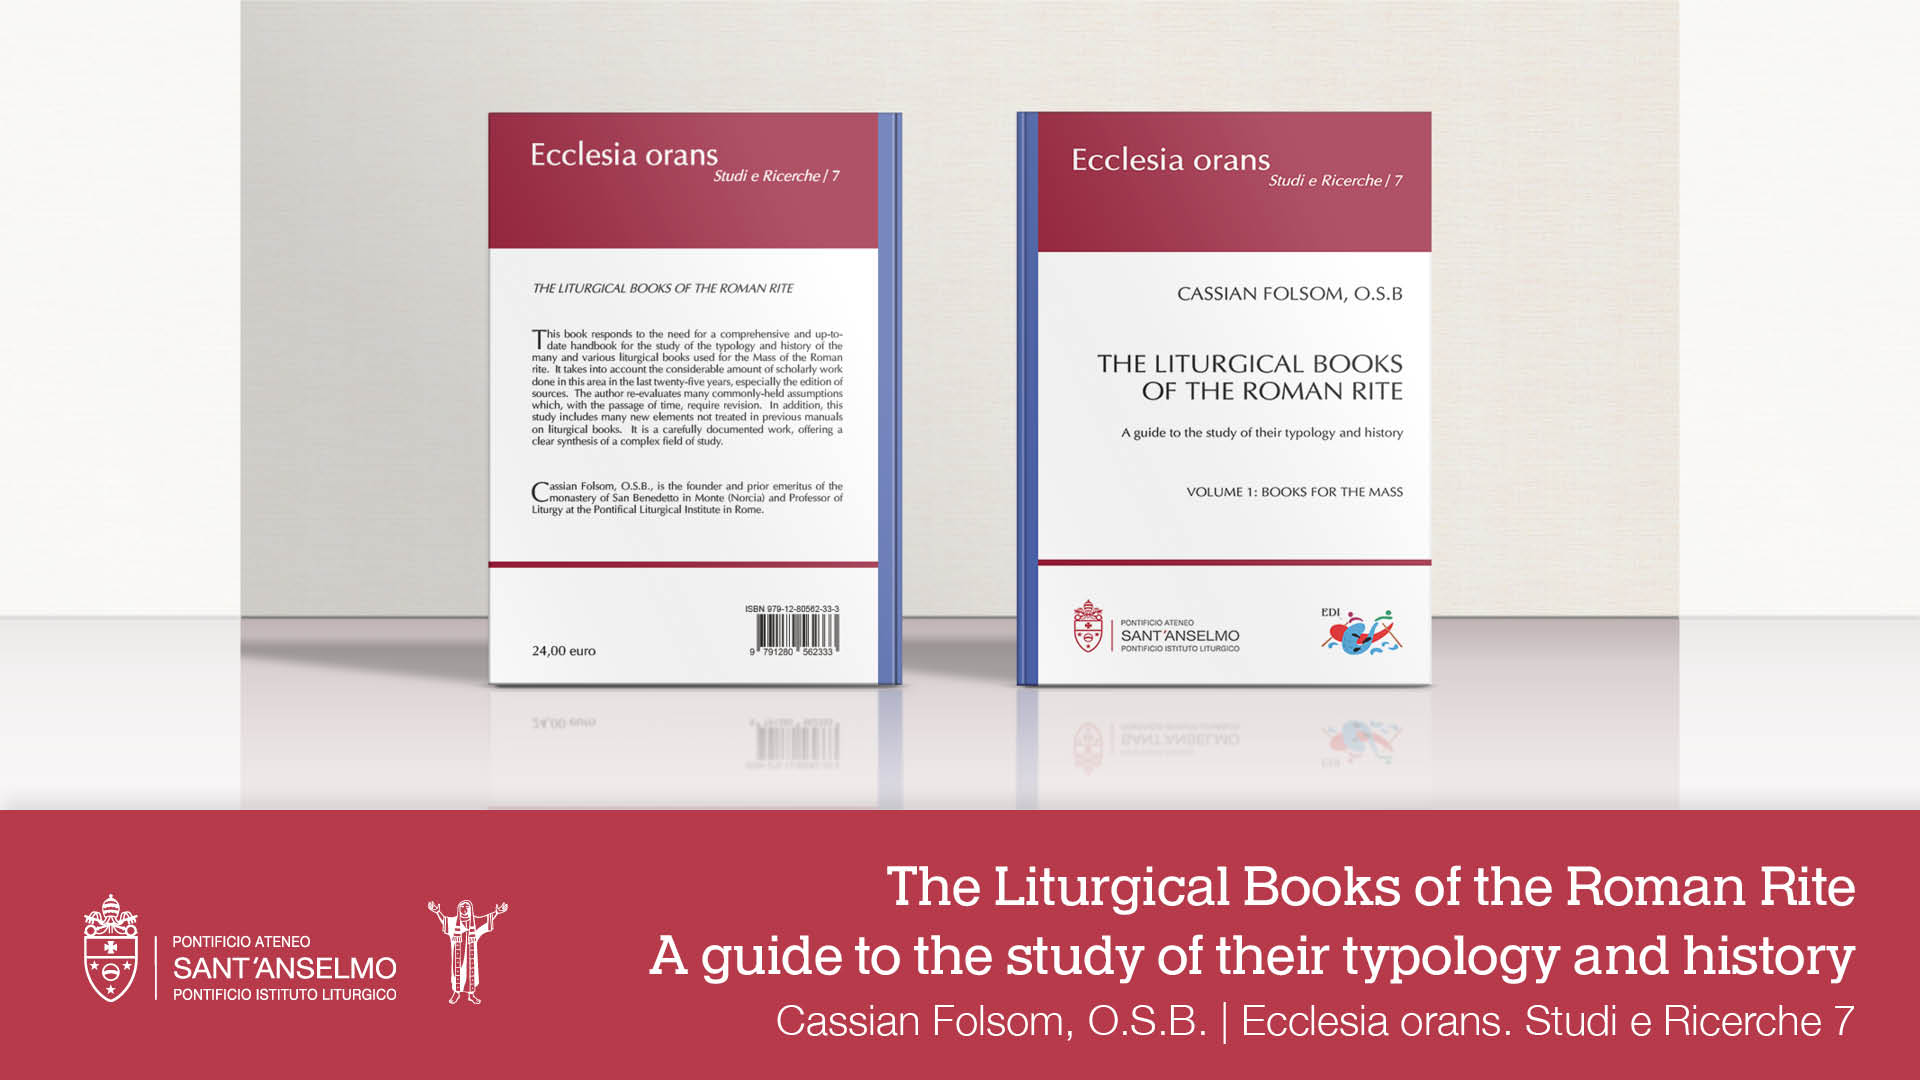 The liturgical books of the Roman rite